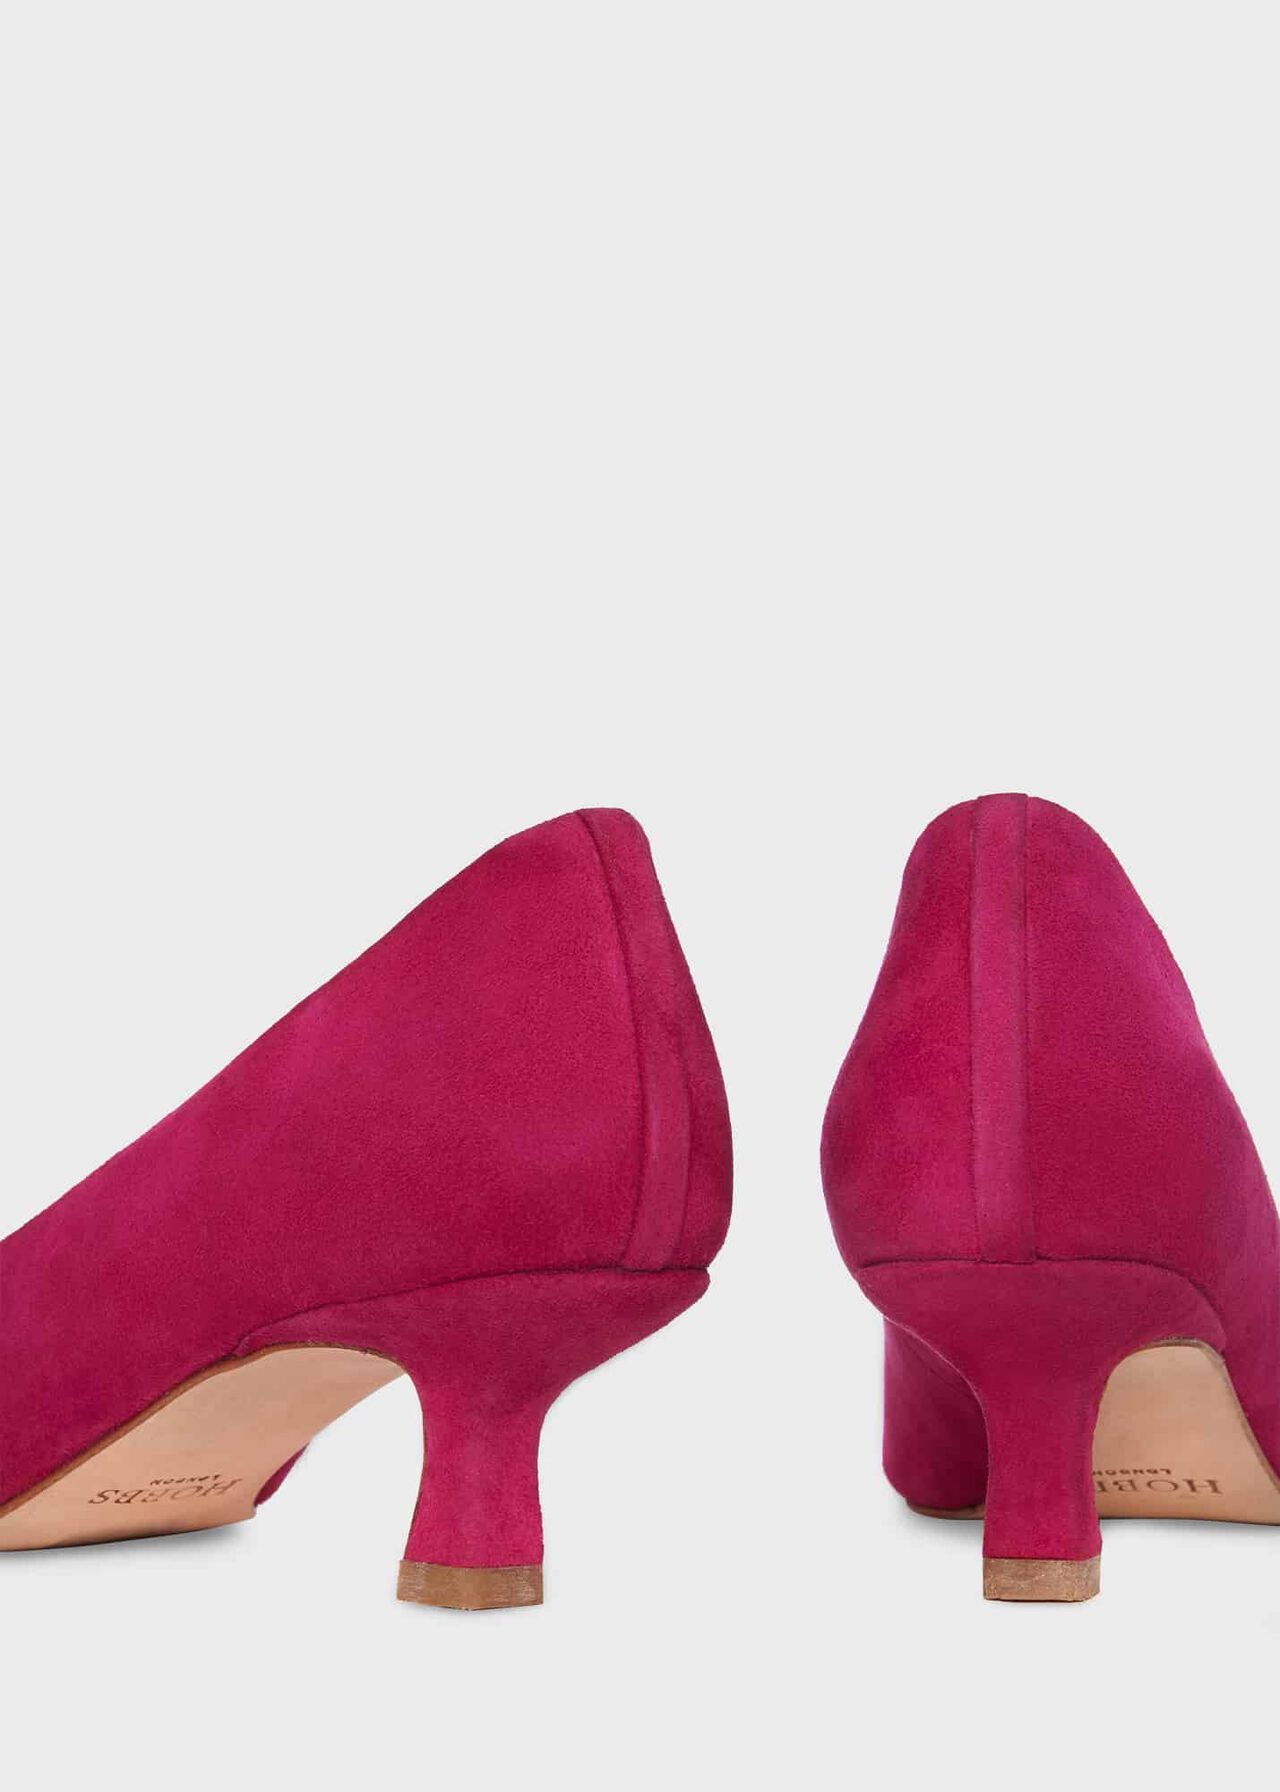 Dita Court Shoes, Florentine Pink, hi-res